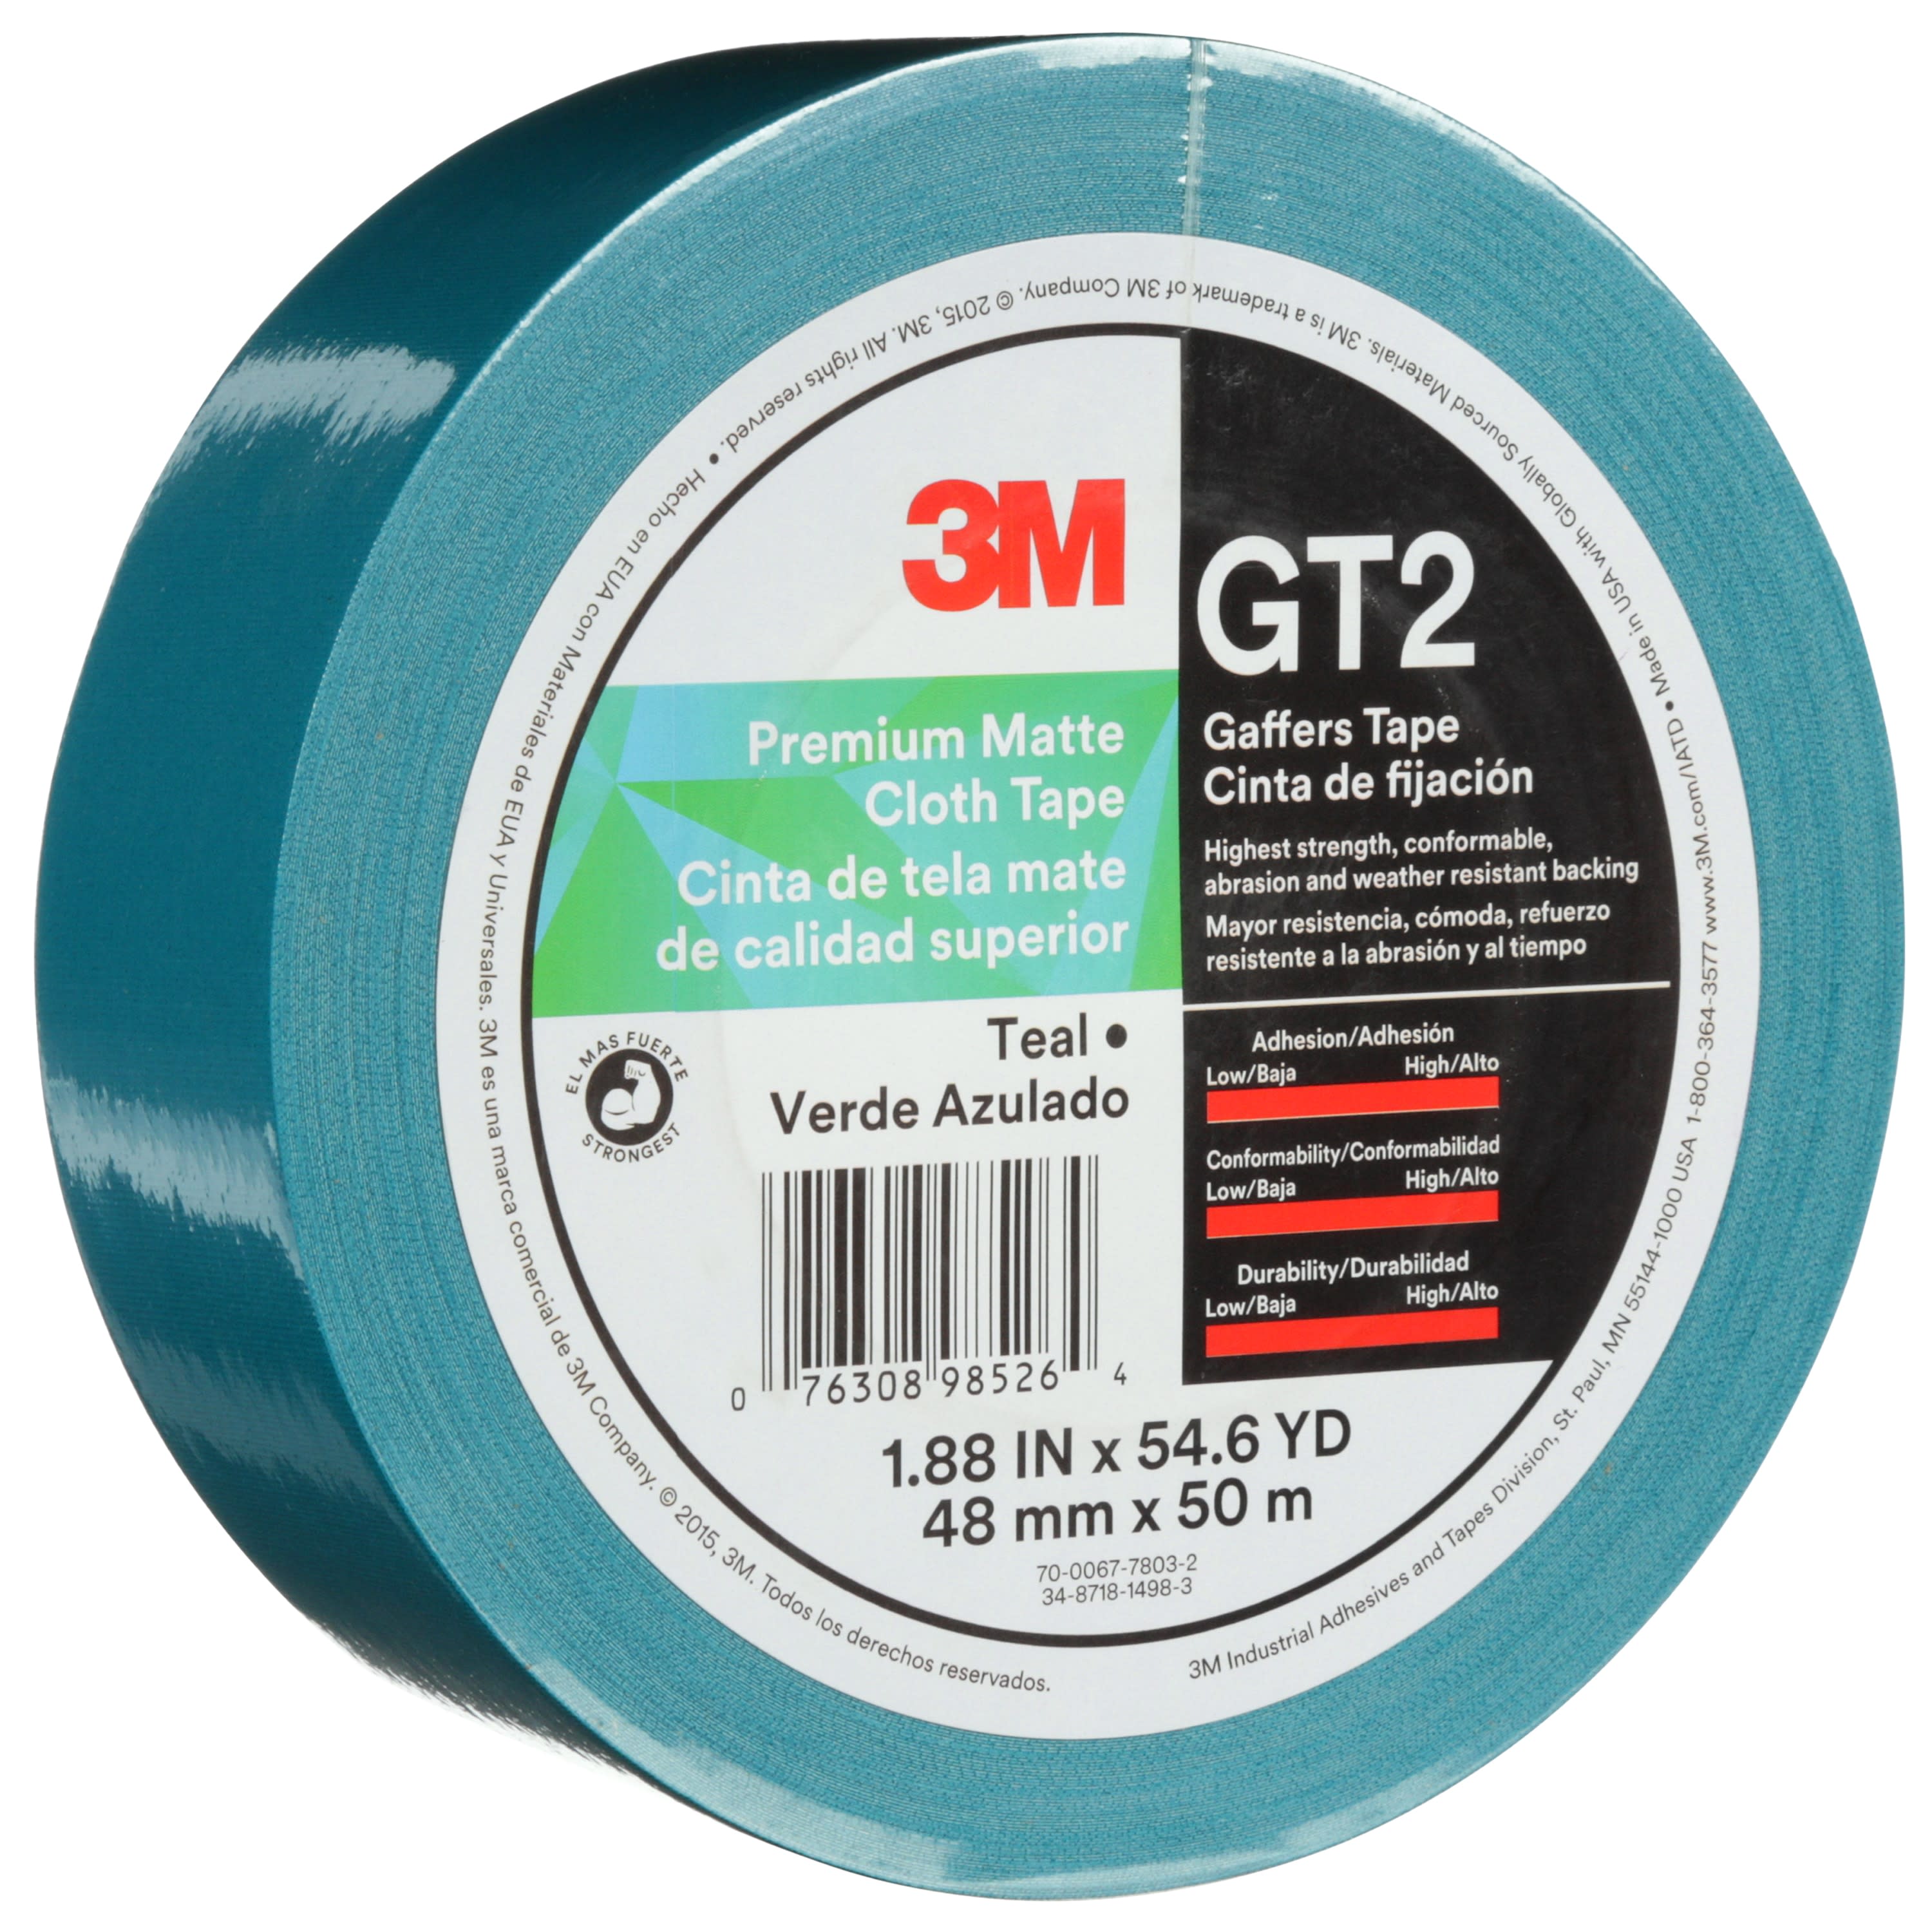 3M™ Premium Matte Cloth (Gaffers) Tape GT2, Teal, 48 mm x 50 m, 11 mil,
24 per case